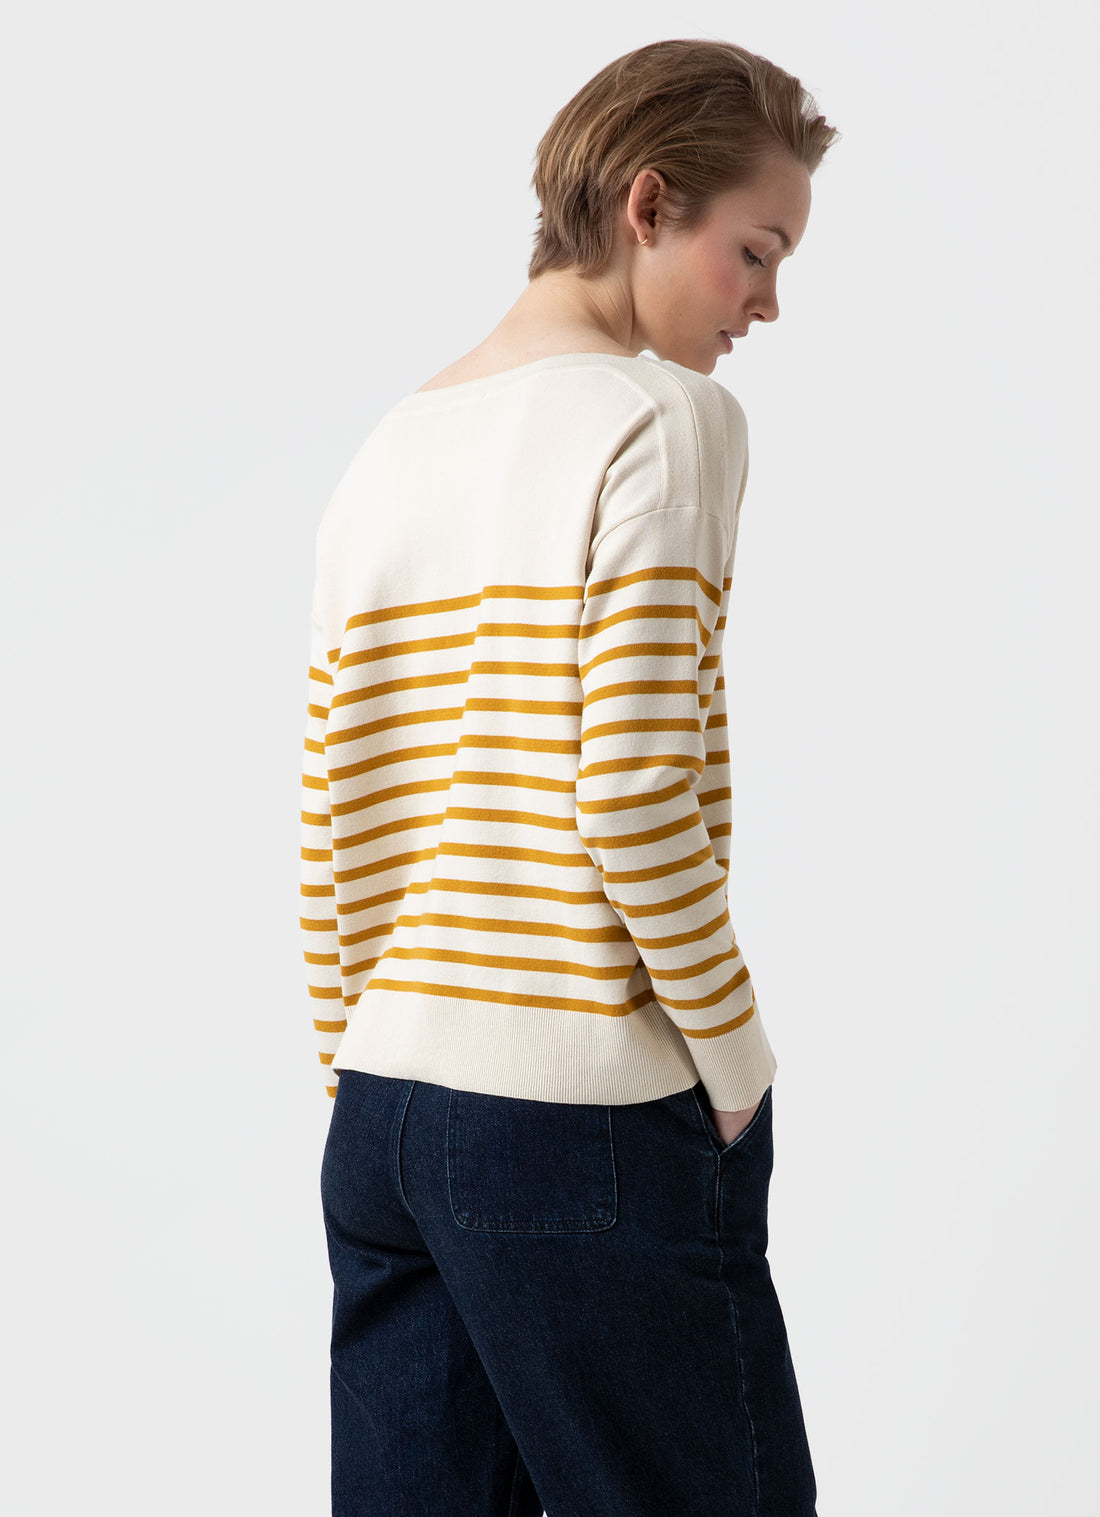 Women's Breton Stripe Sweater in Ecru/Cider Breton Stripe